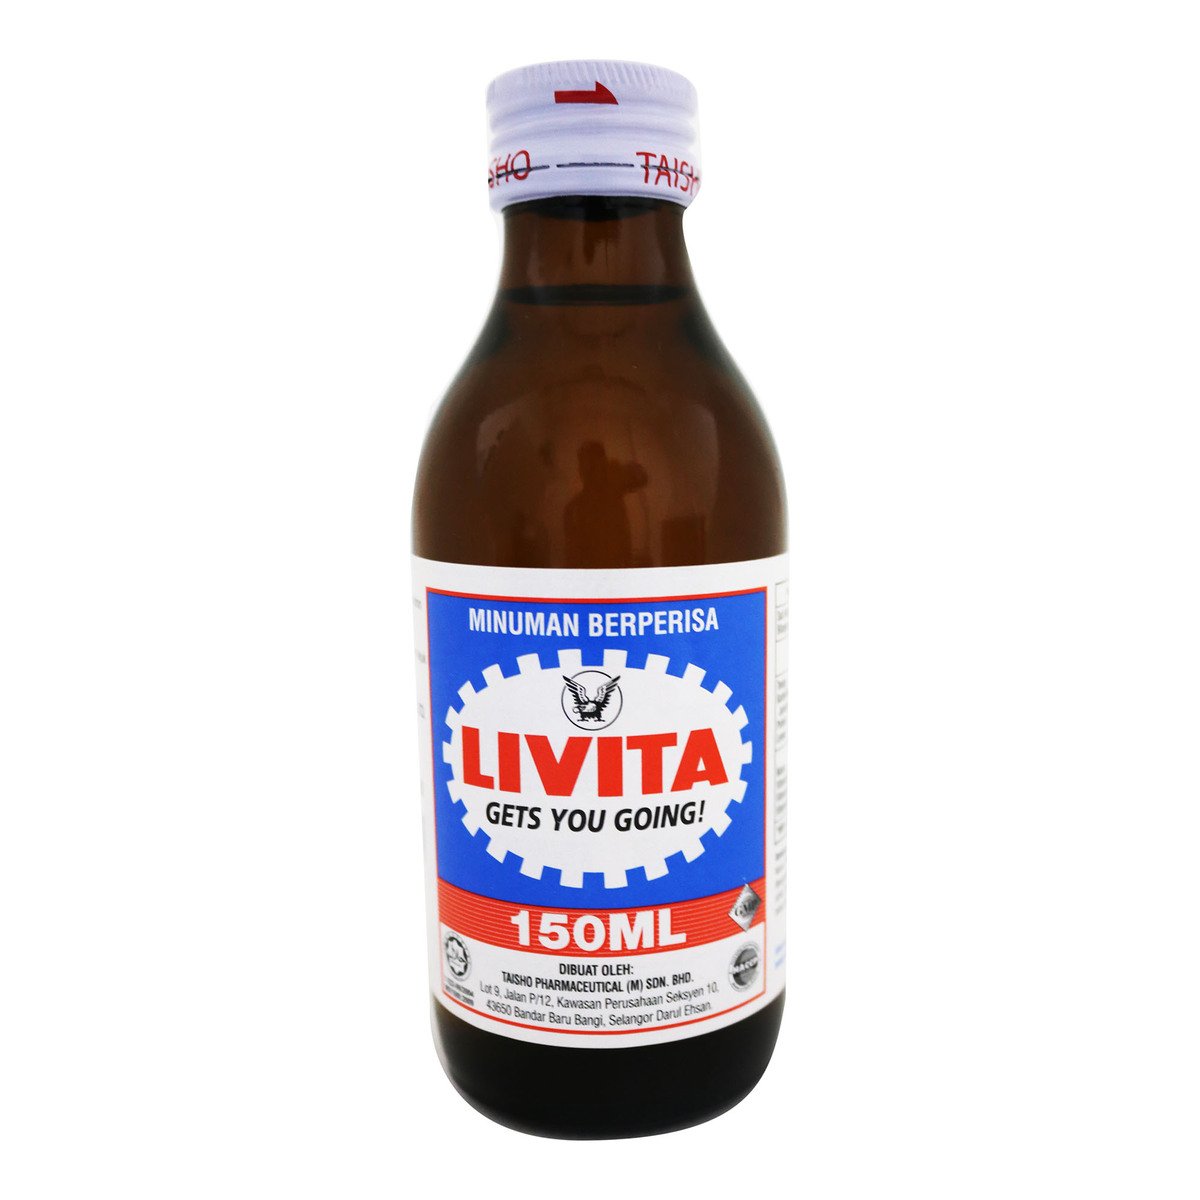 Livita Original Drink 150ml